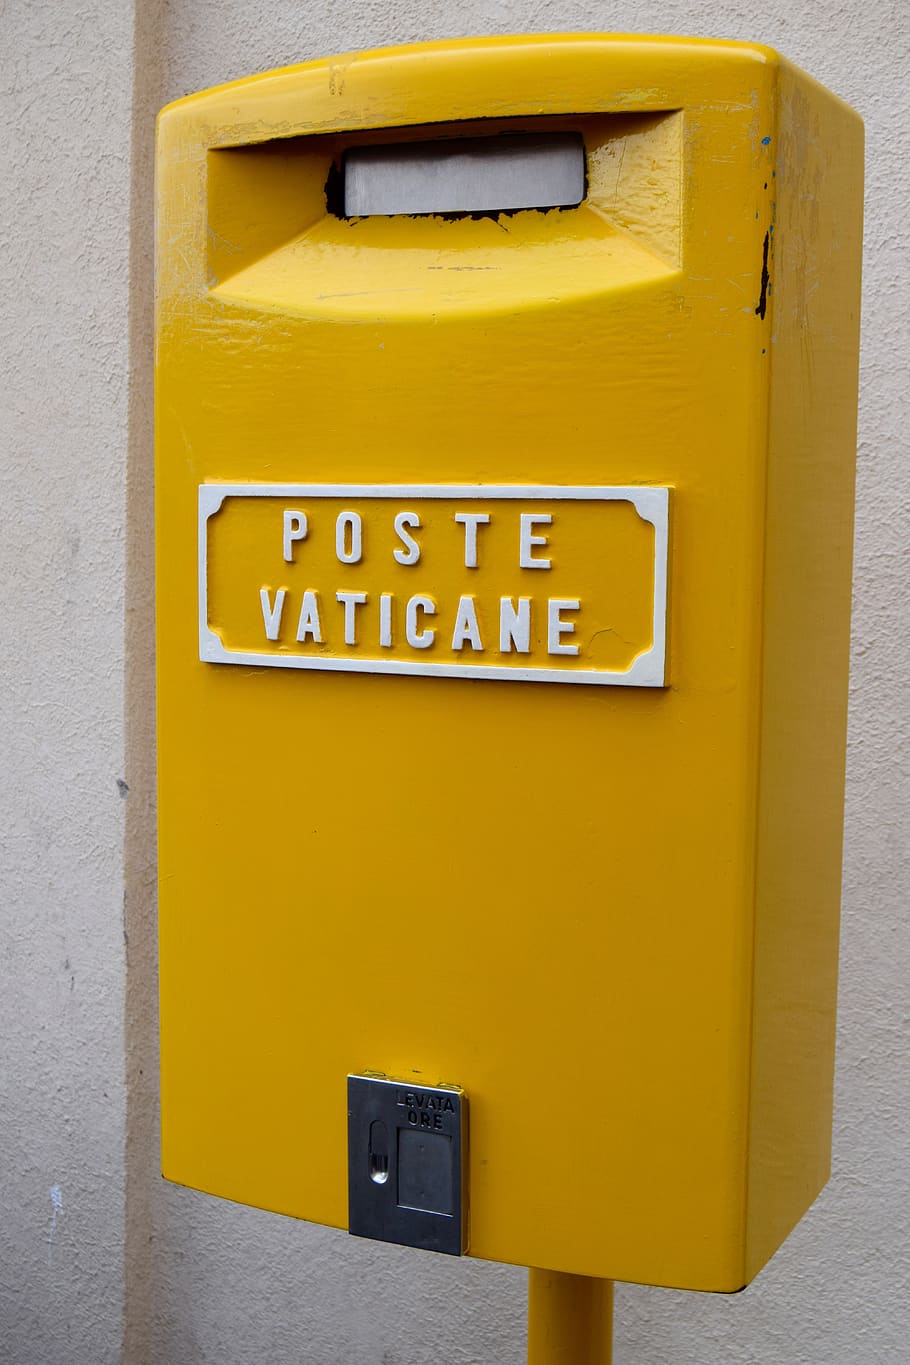 yellow, post box, vatican post, communication, mailbox, text, mail, letter, public mailbox, western script